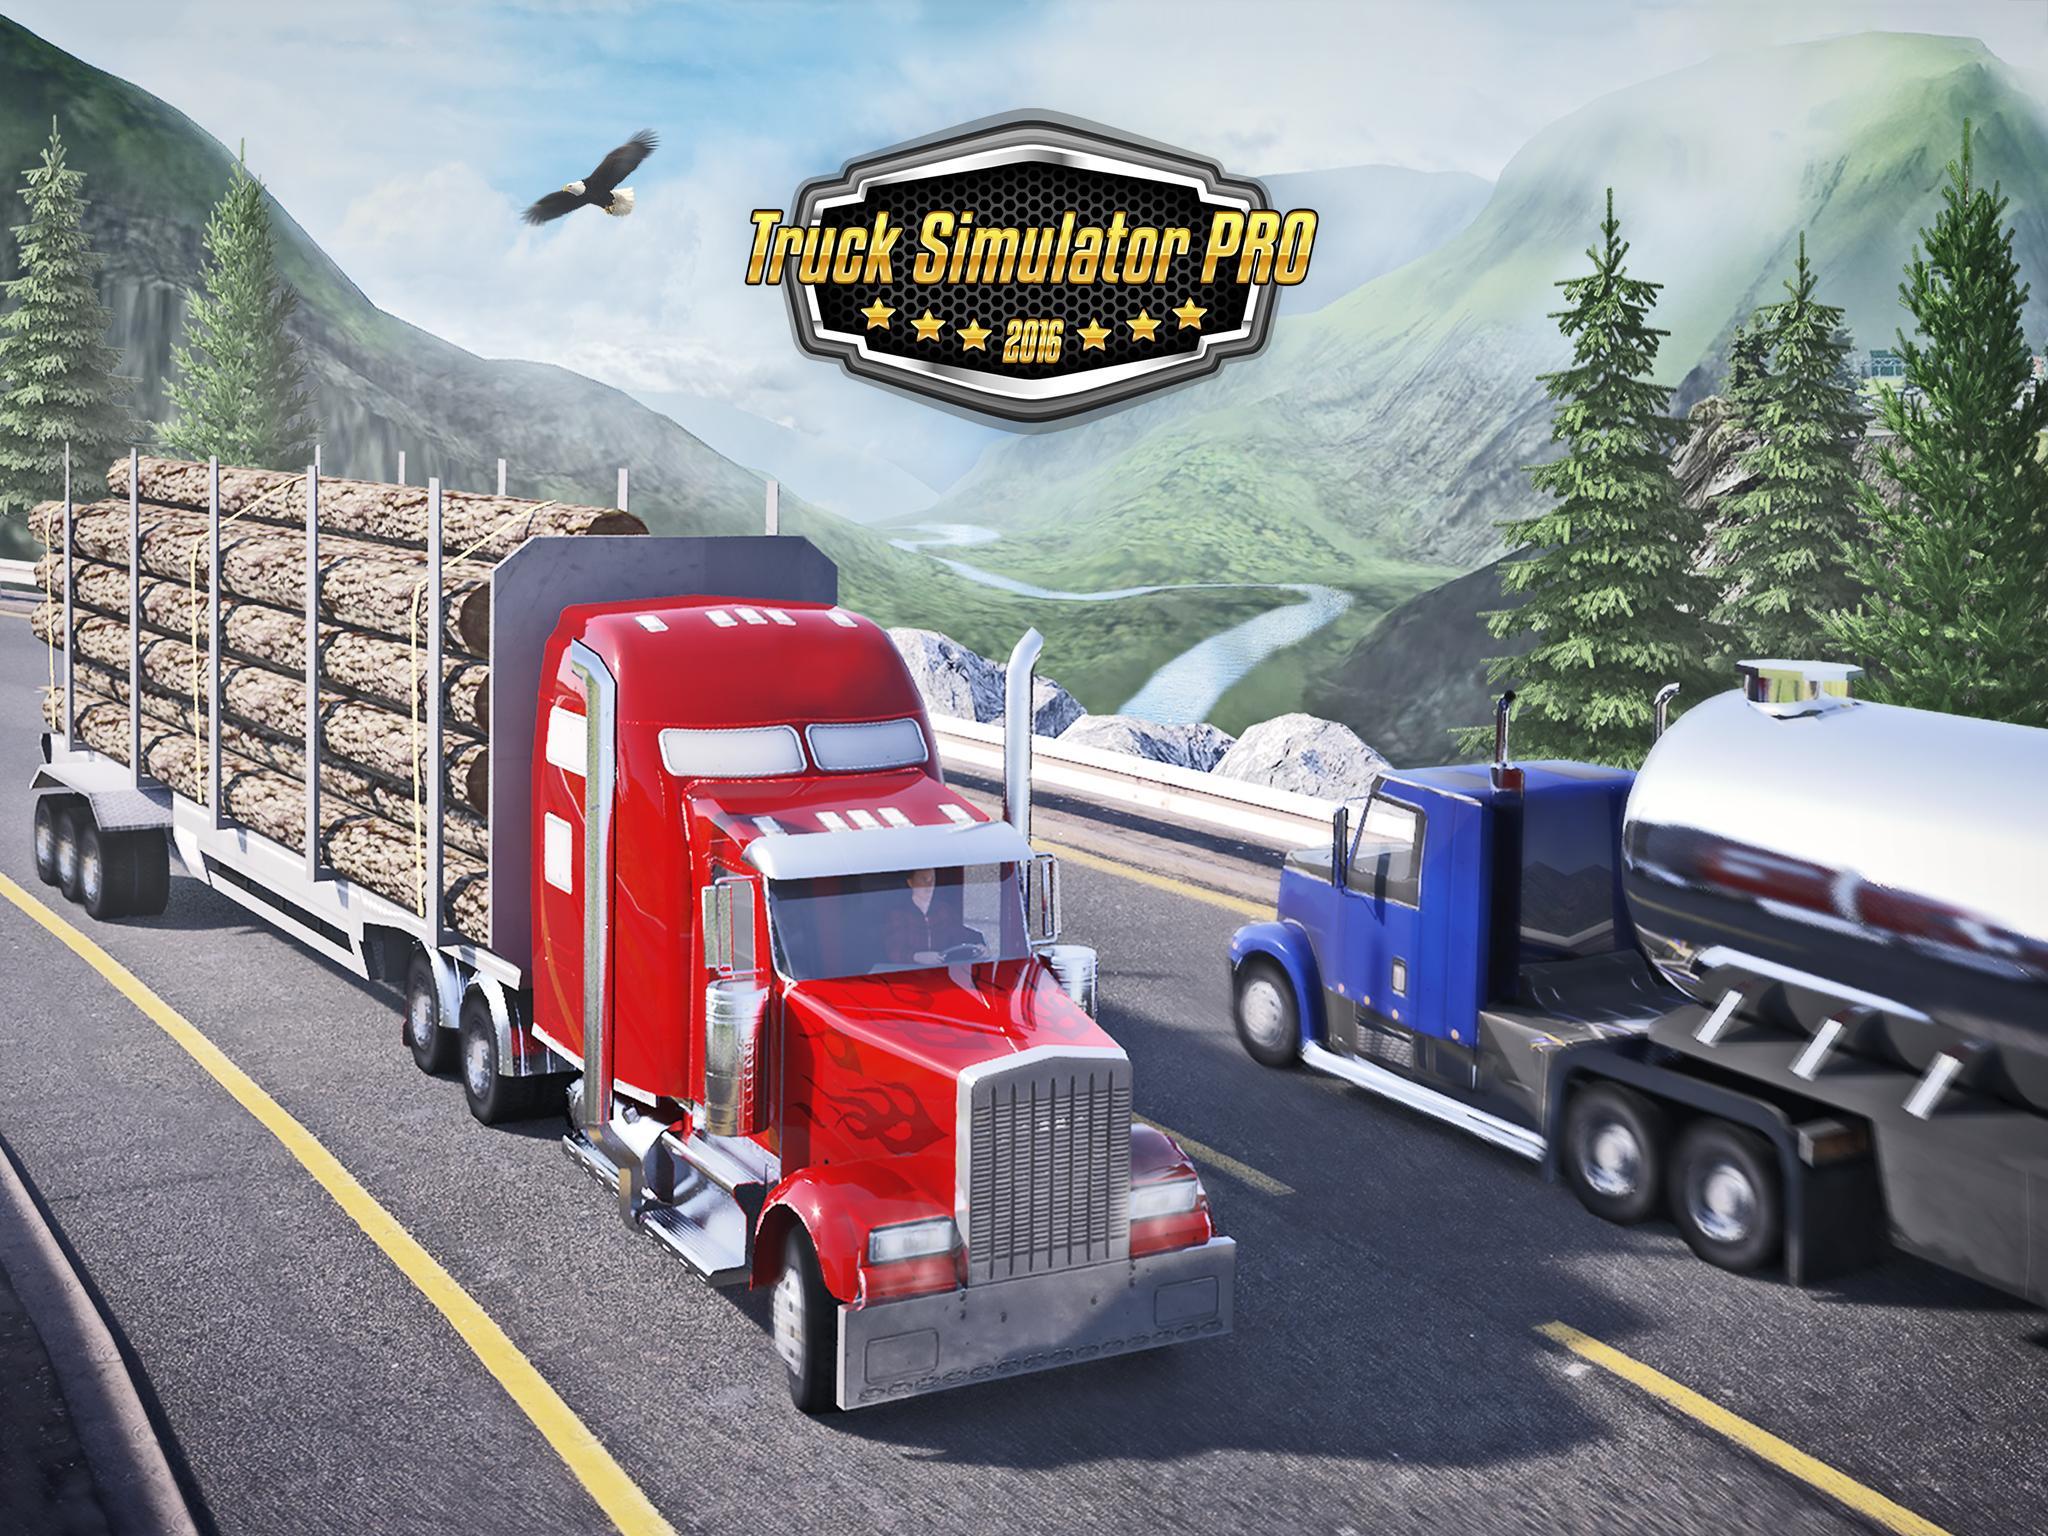 Truck simulator pro 3. Truck Simulator. Фура игра. Игра про Грузовики. Симулятор фуры.